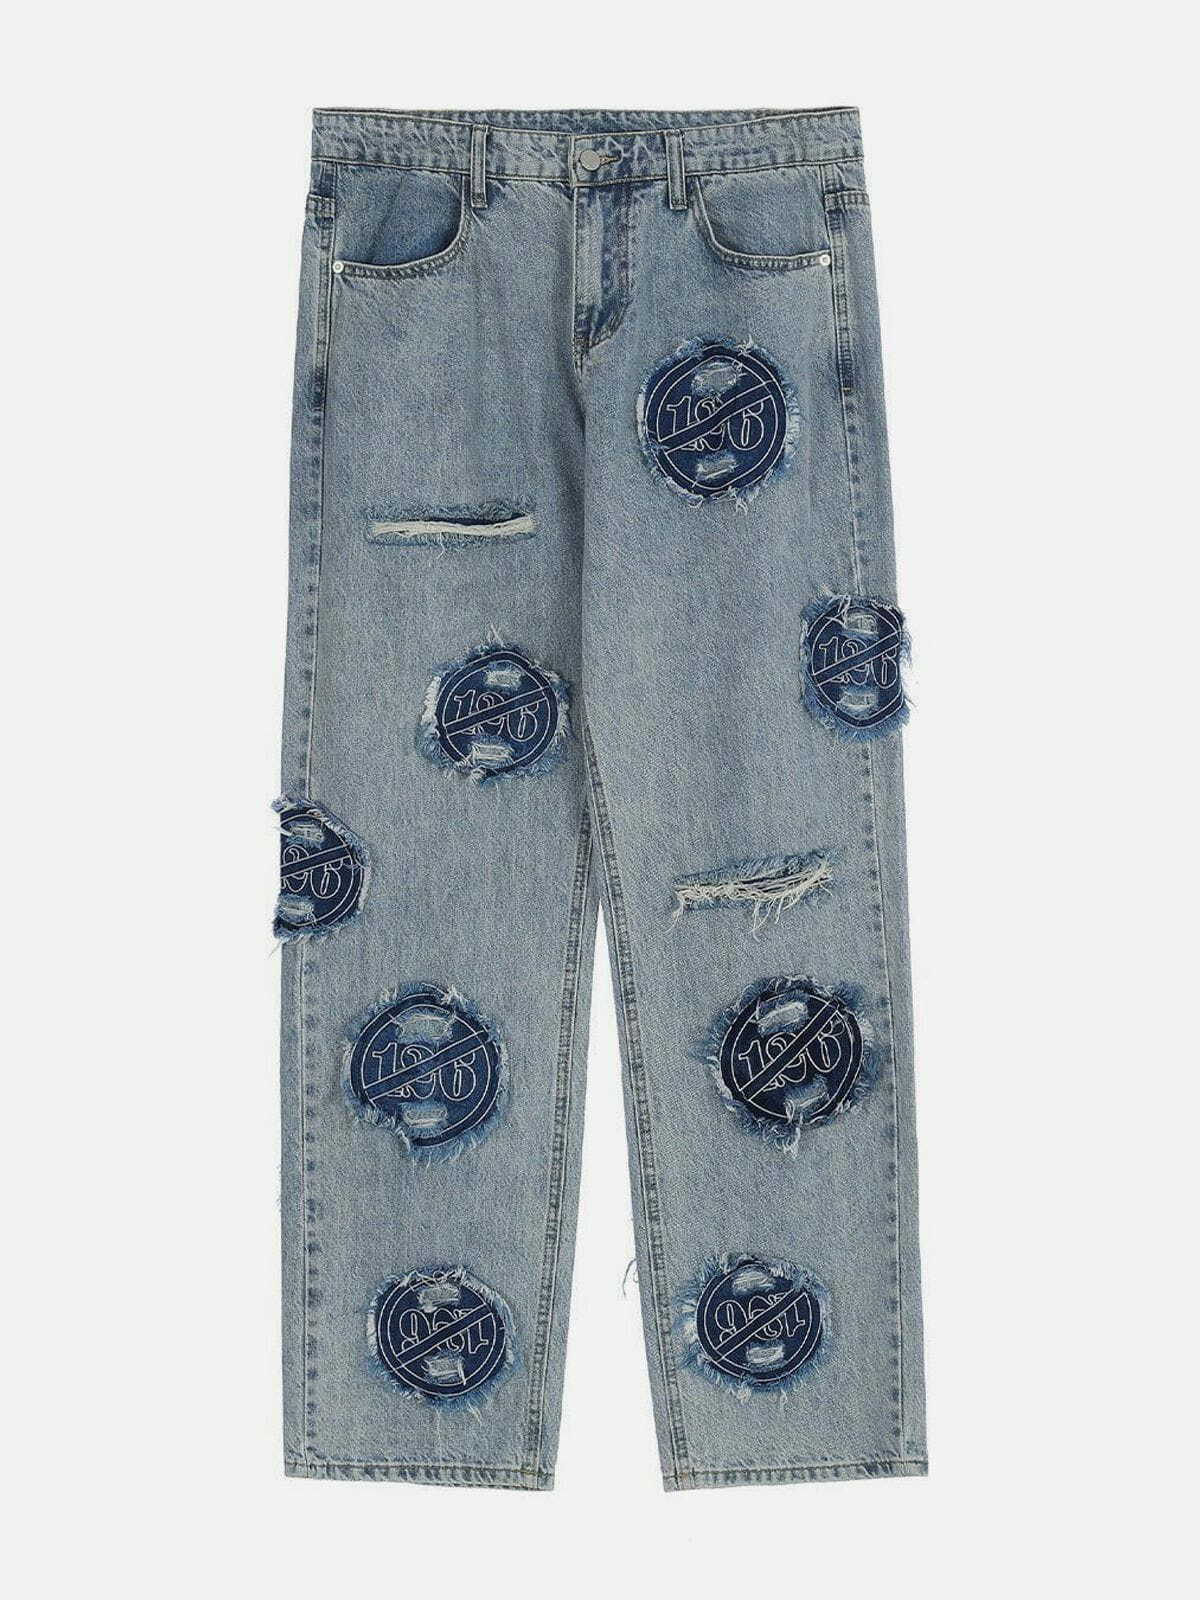 patchwork embroidery denim jeans edgy urban streetwear 7096